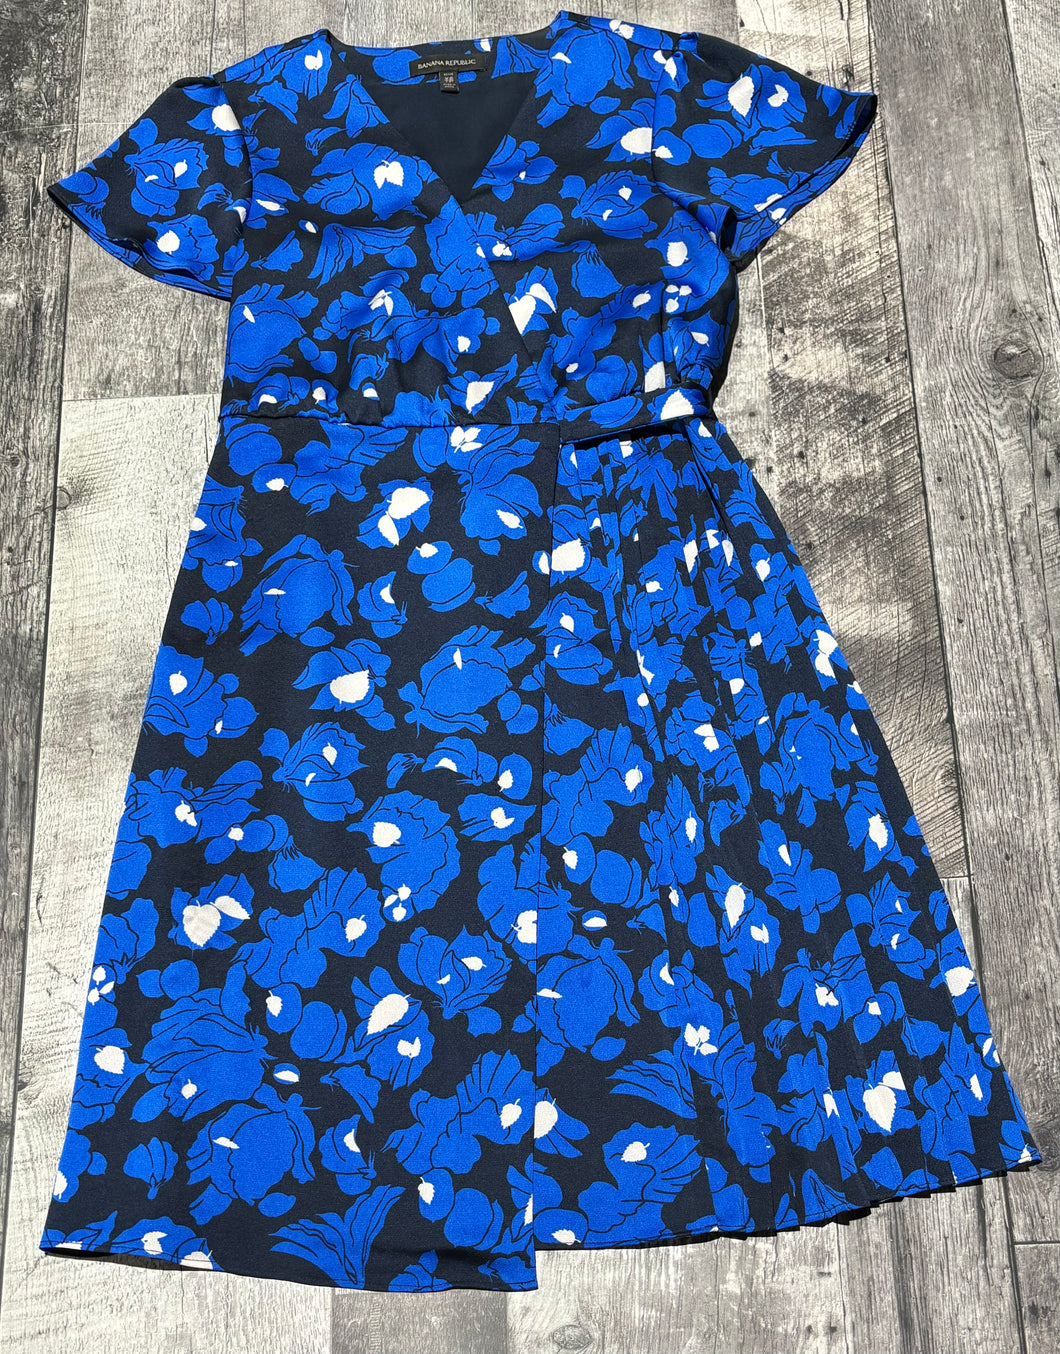 Banana Republic blue/black/white dress - Hers size XS